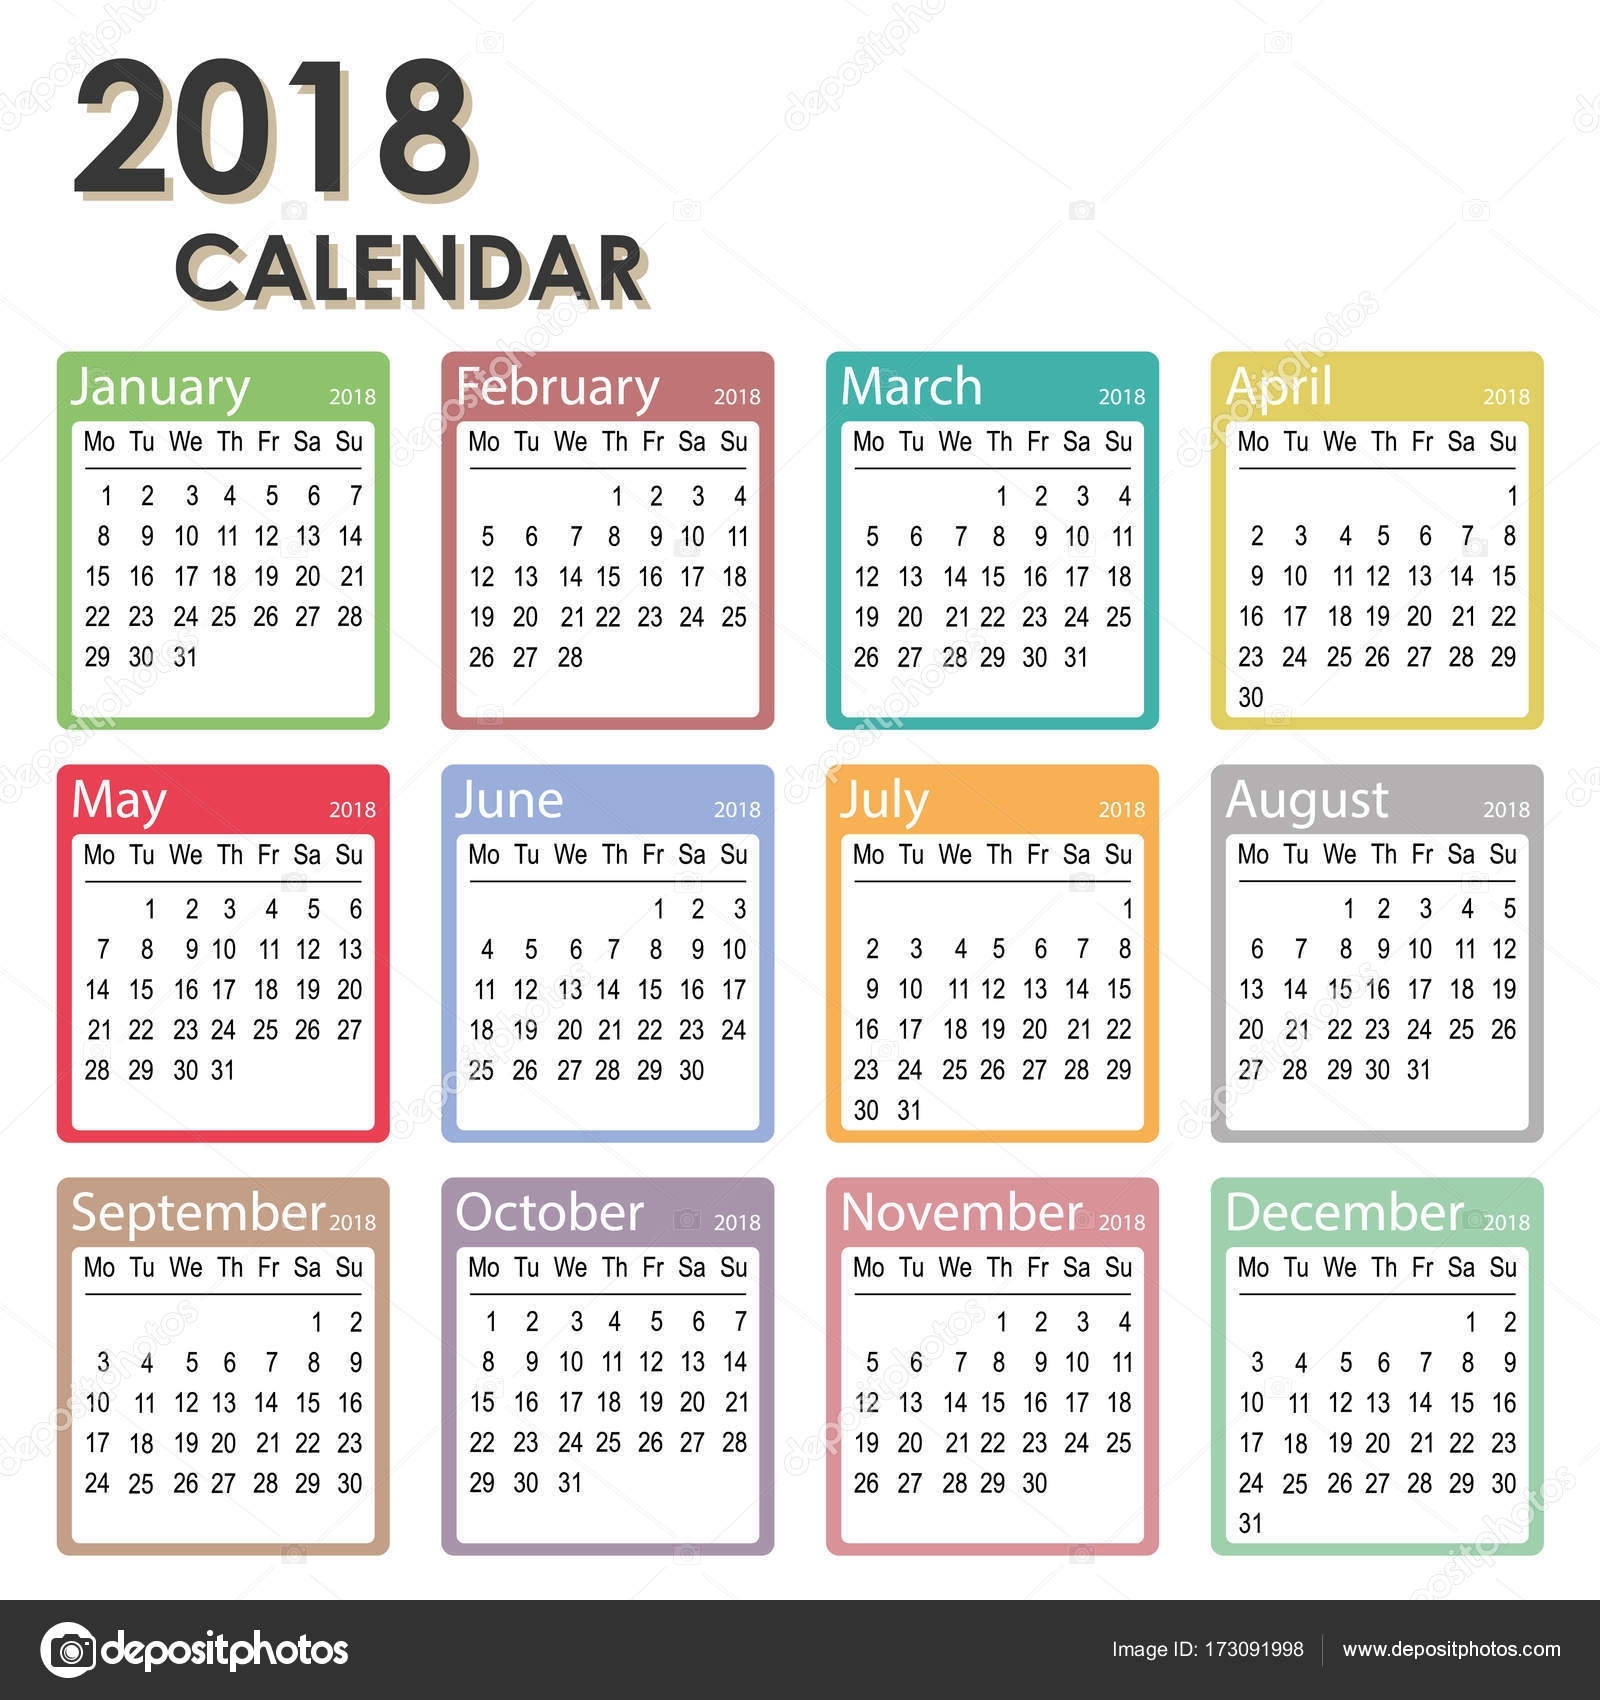 2018 Year Calendar, Week Starts On Monday, Monthly